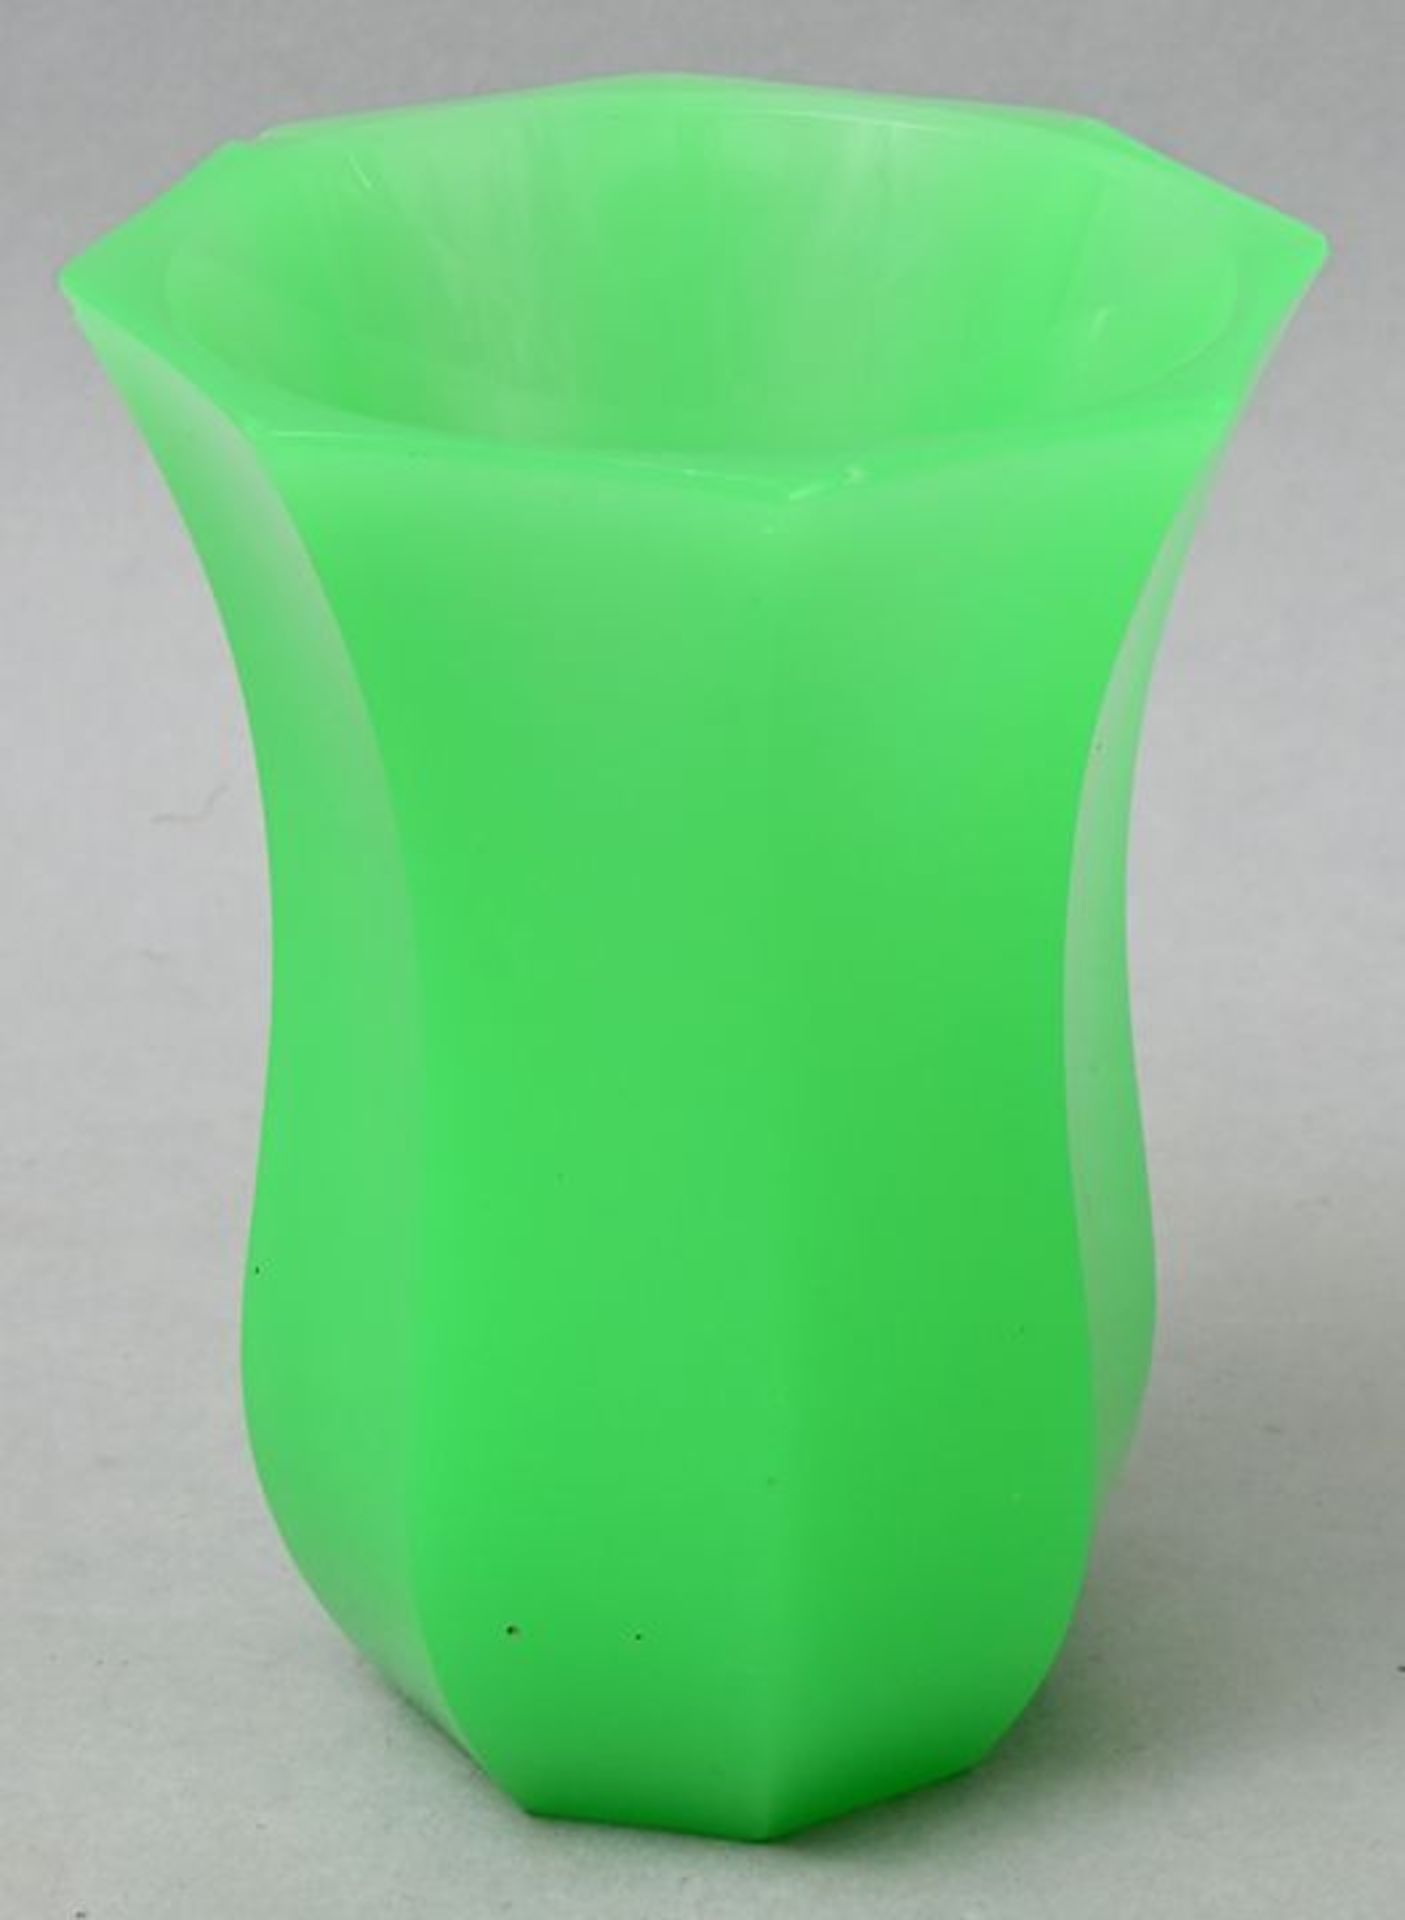 Becherglas/ glass beaker